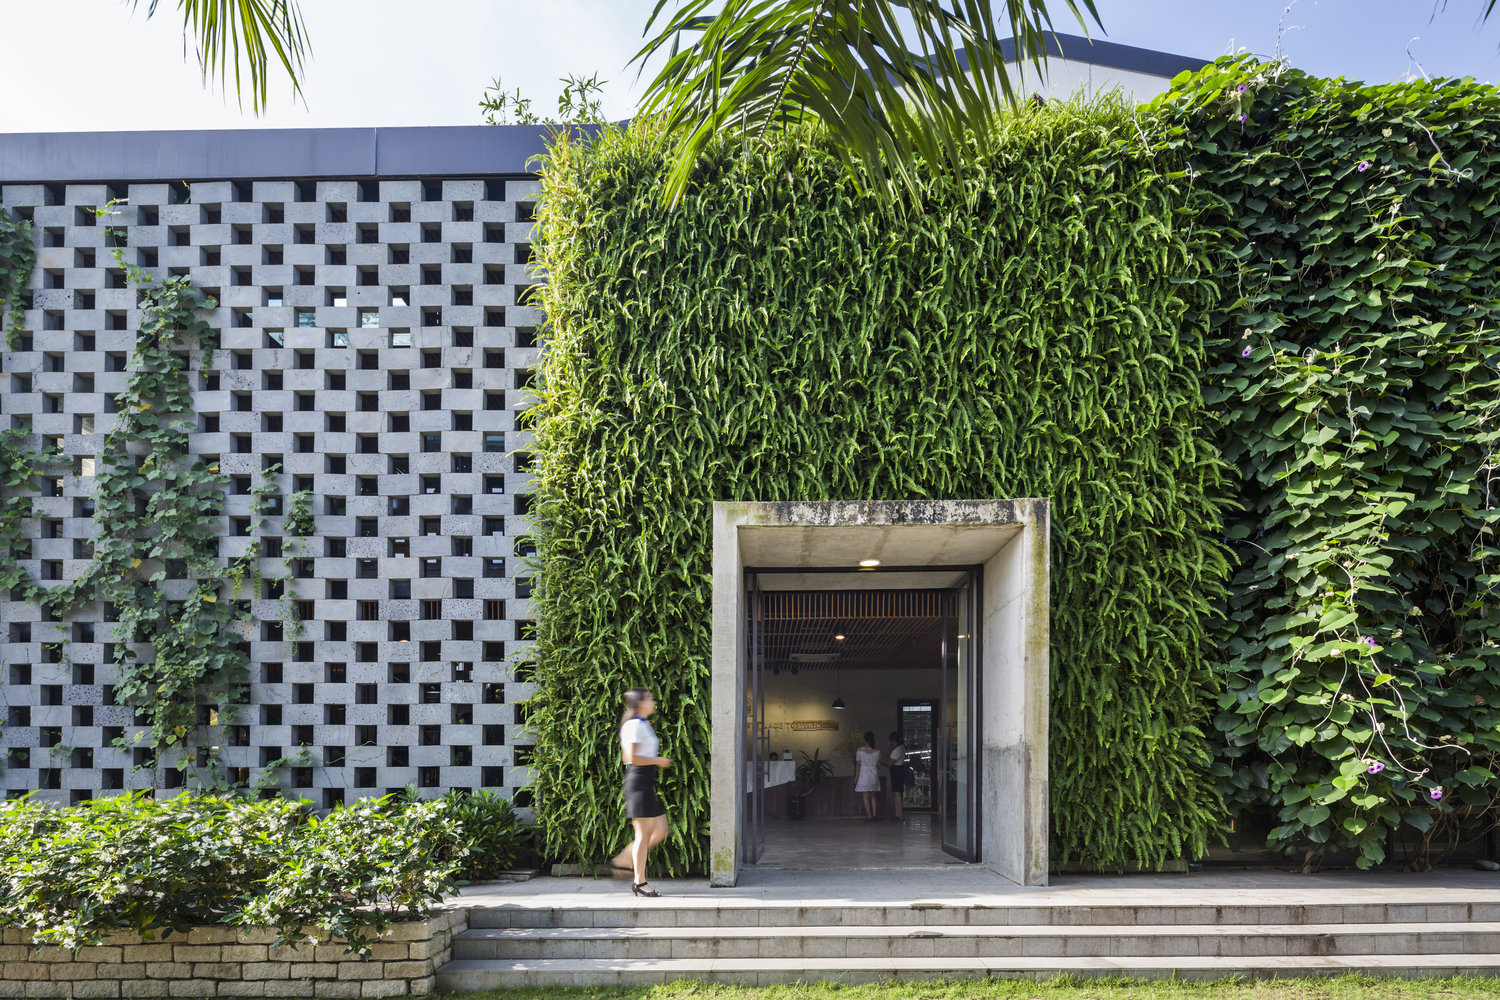 La nuova fabbrica Desino in Vietnam ricoperta da pareti verdi 